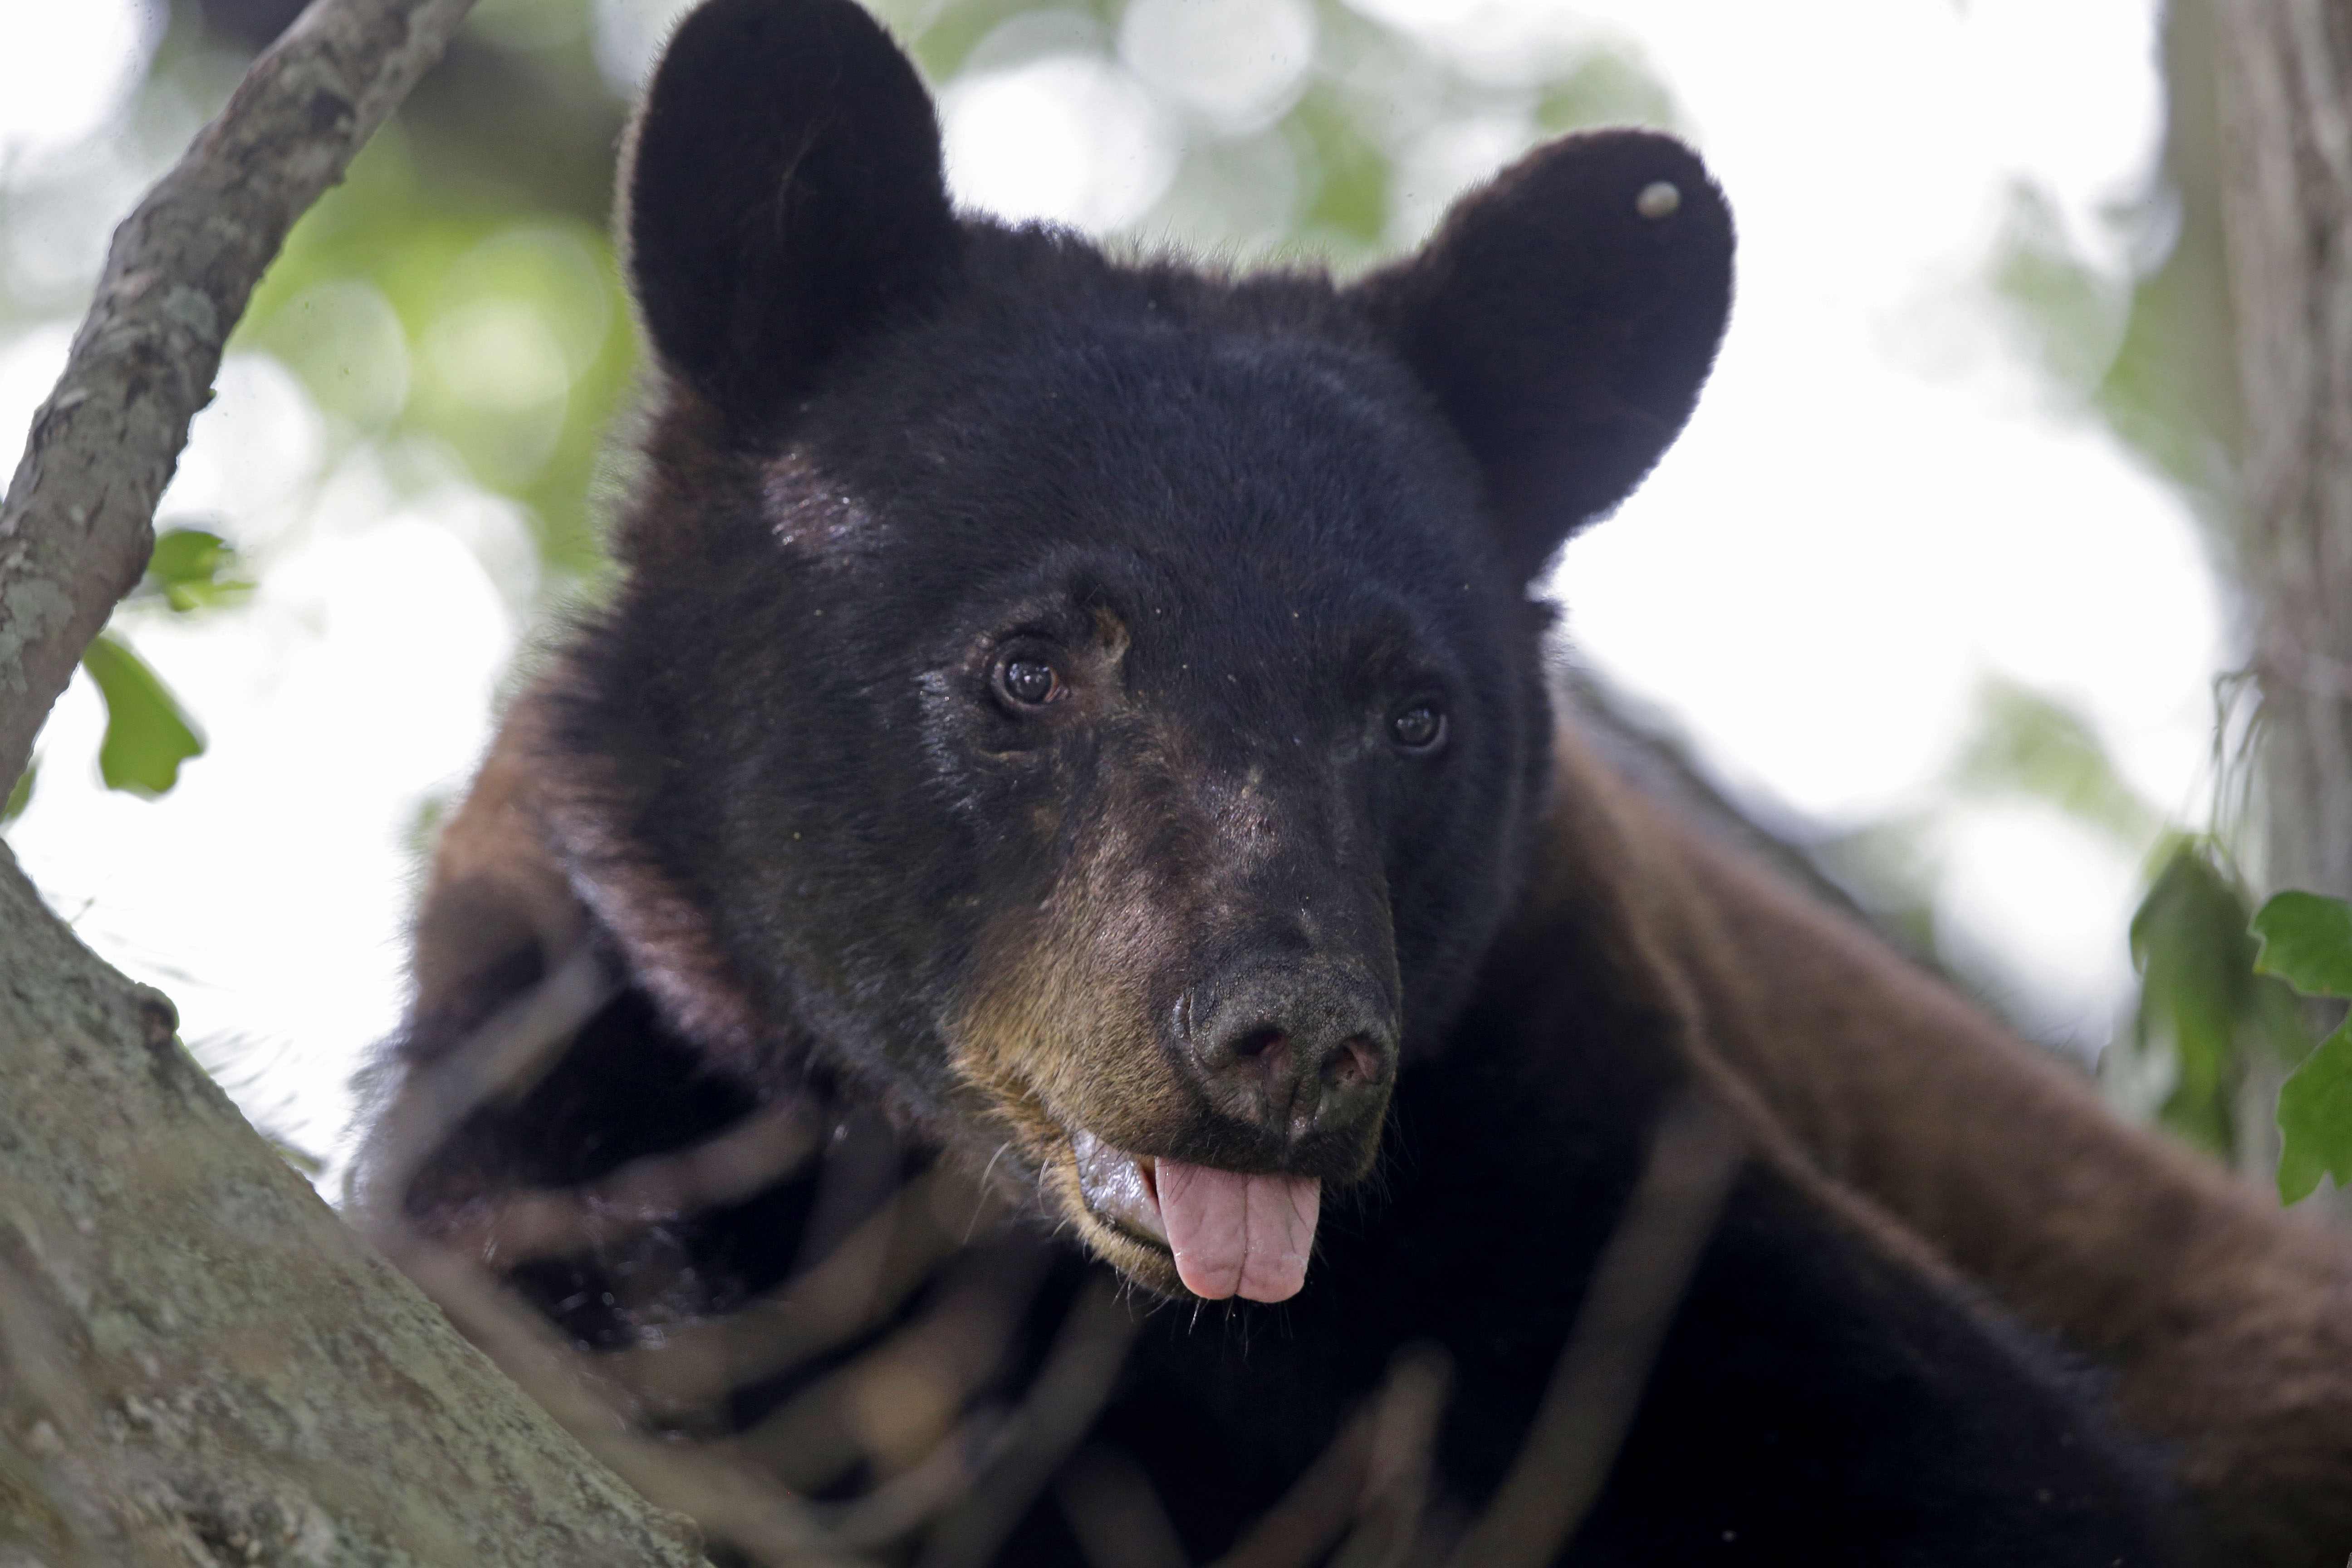 Louisiana Black Bear No Longer Endangered, Department of Interior ...